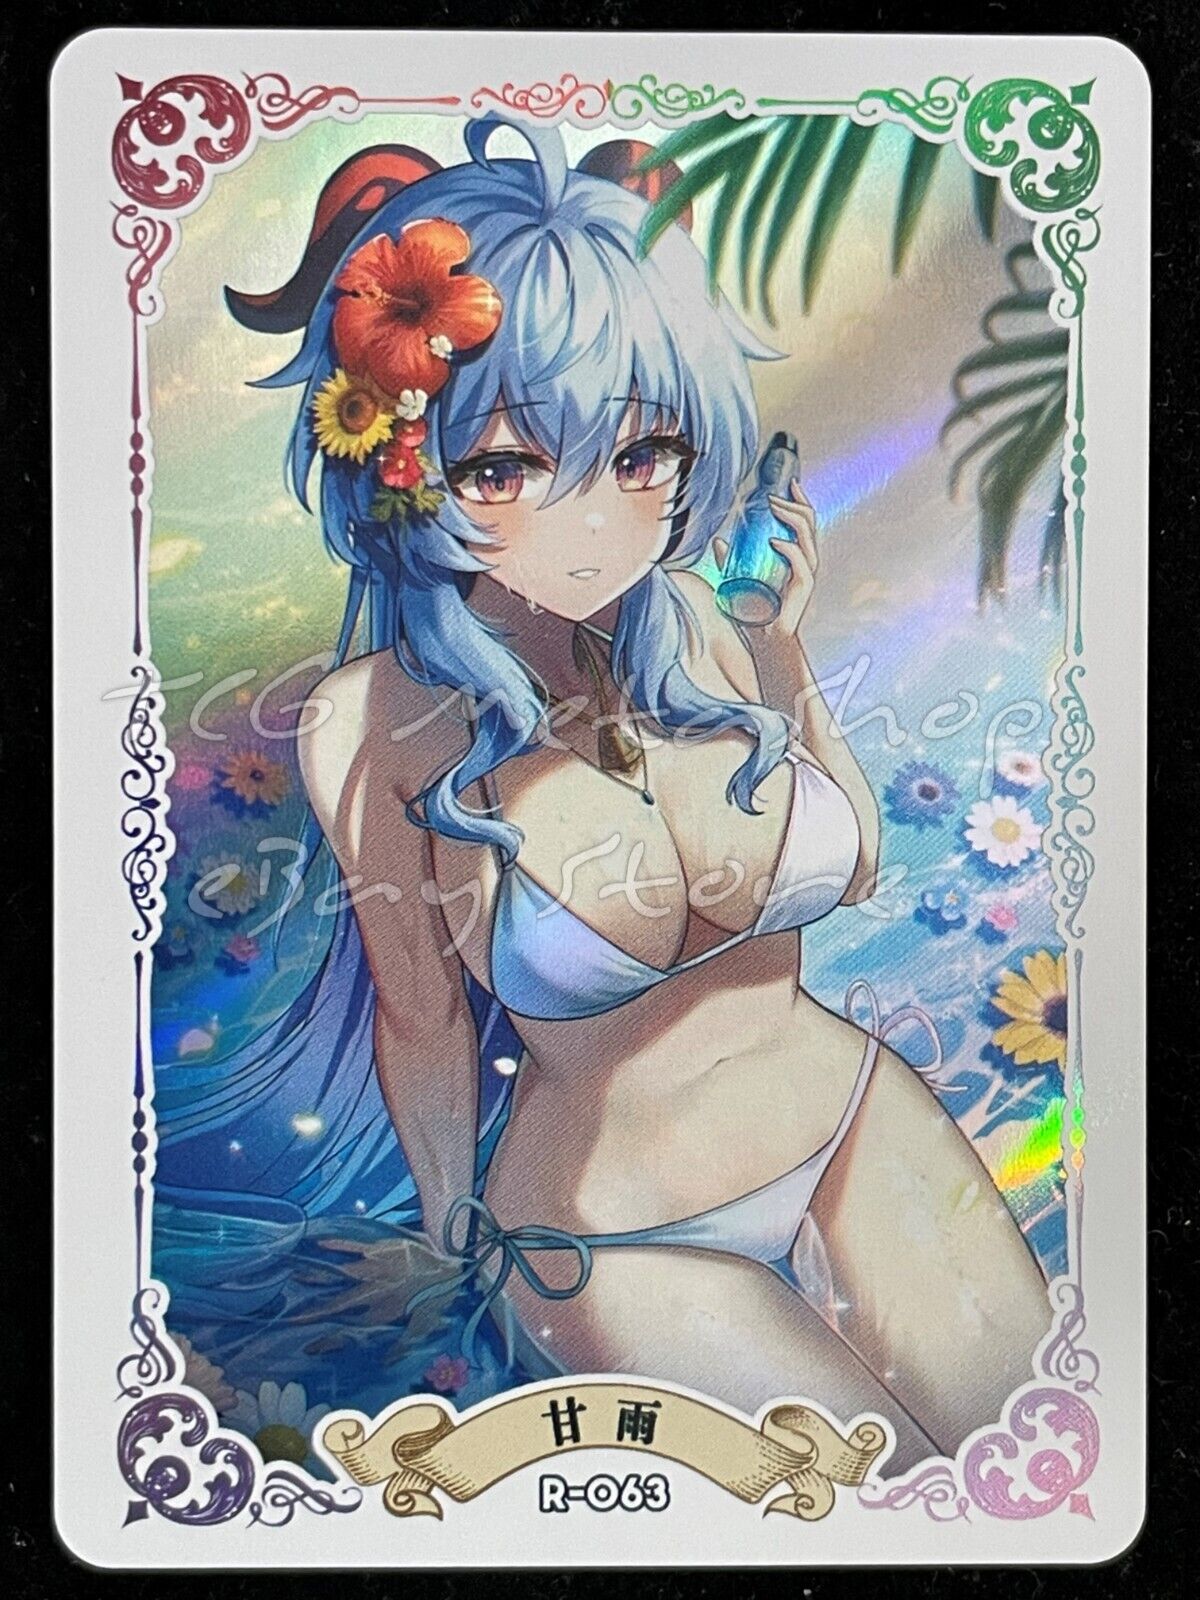 🔥 ACG [Pick your Custom R card] Goddess Story Anime Waifu Doujin 🔥